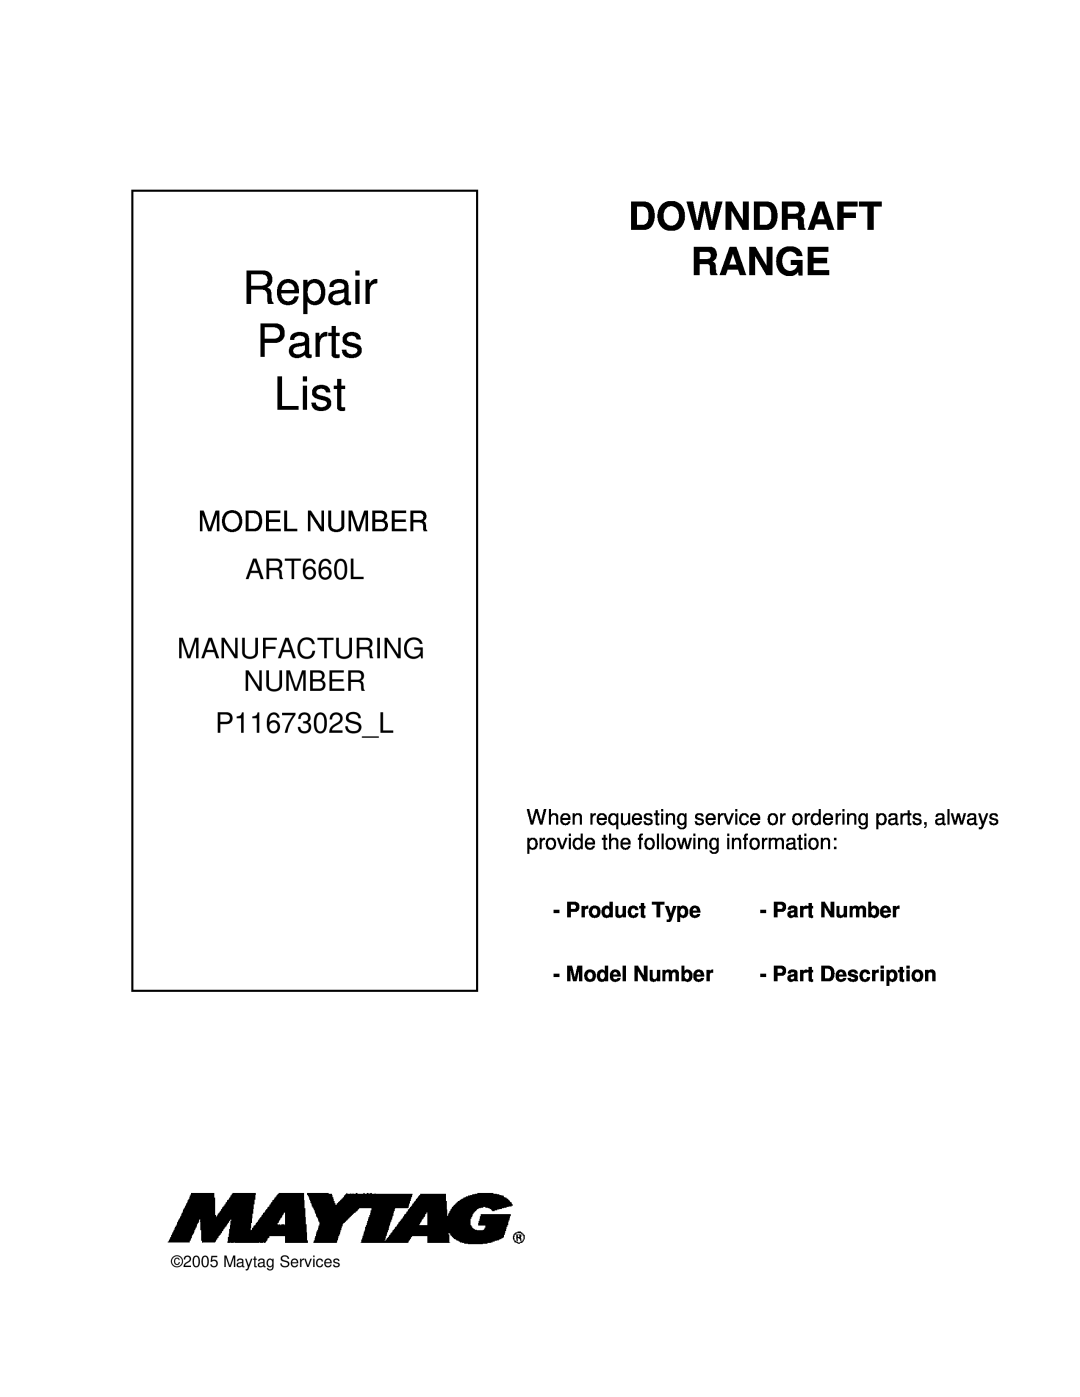 Whirlpool ART660L manual Product Type, Part Number, Model Number, Part Description, Repair Parts List, Downdraft Range 